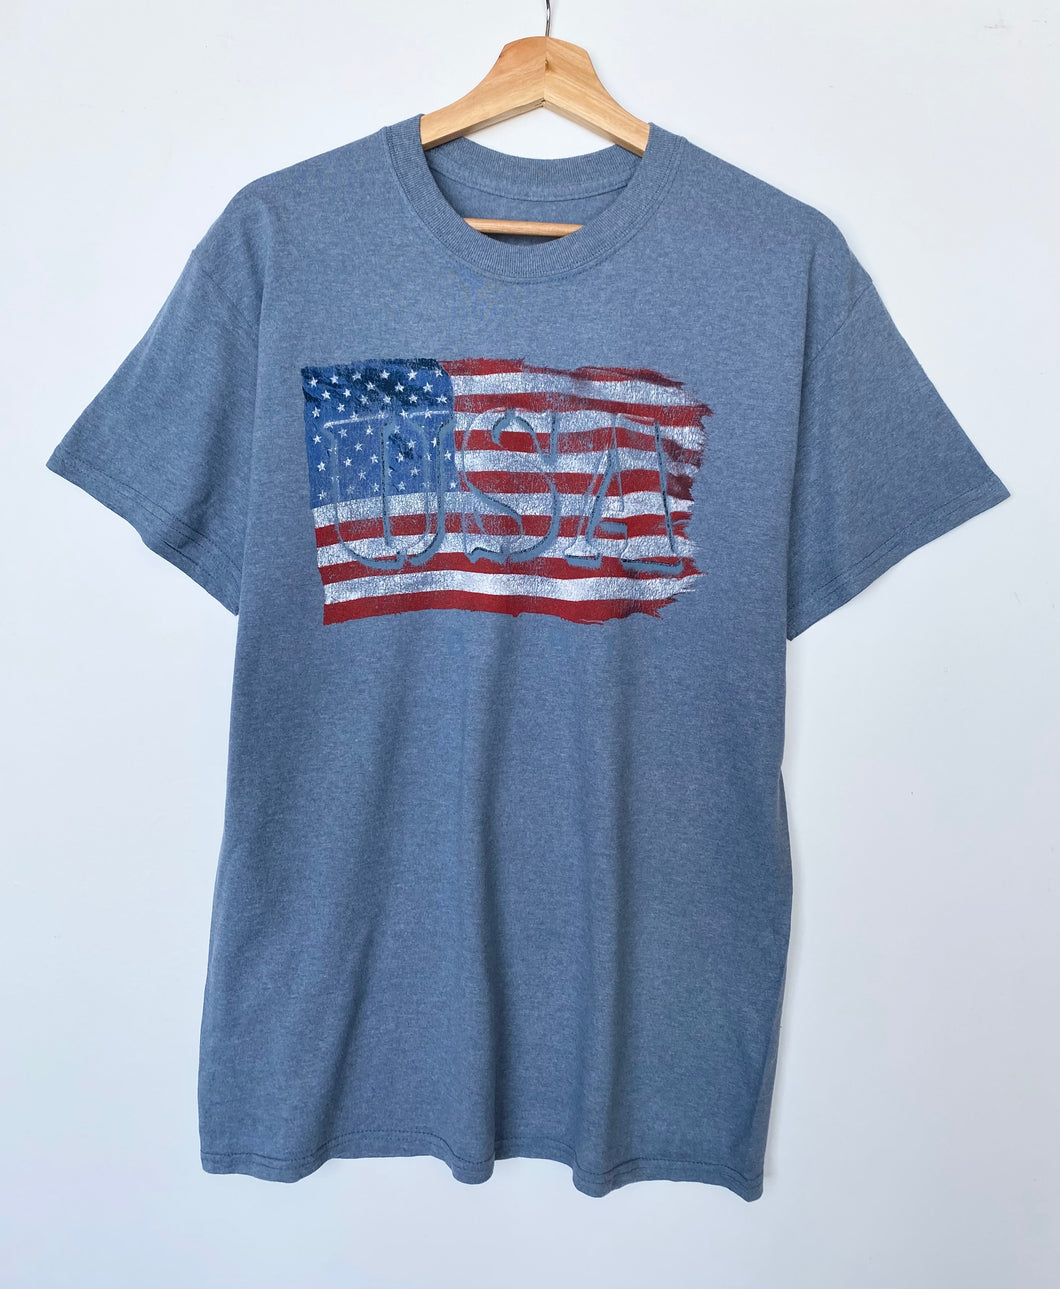 USA printed t-shirt (M)